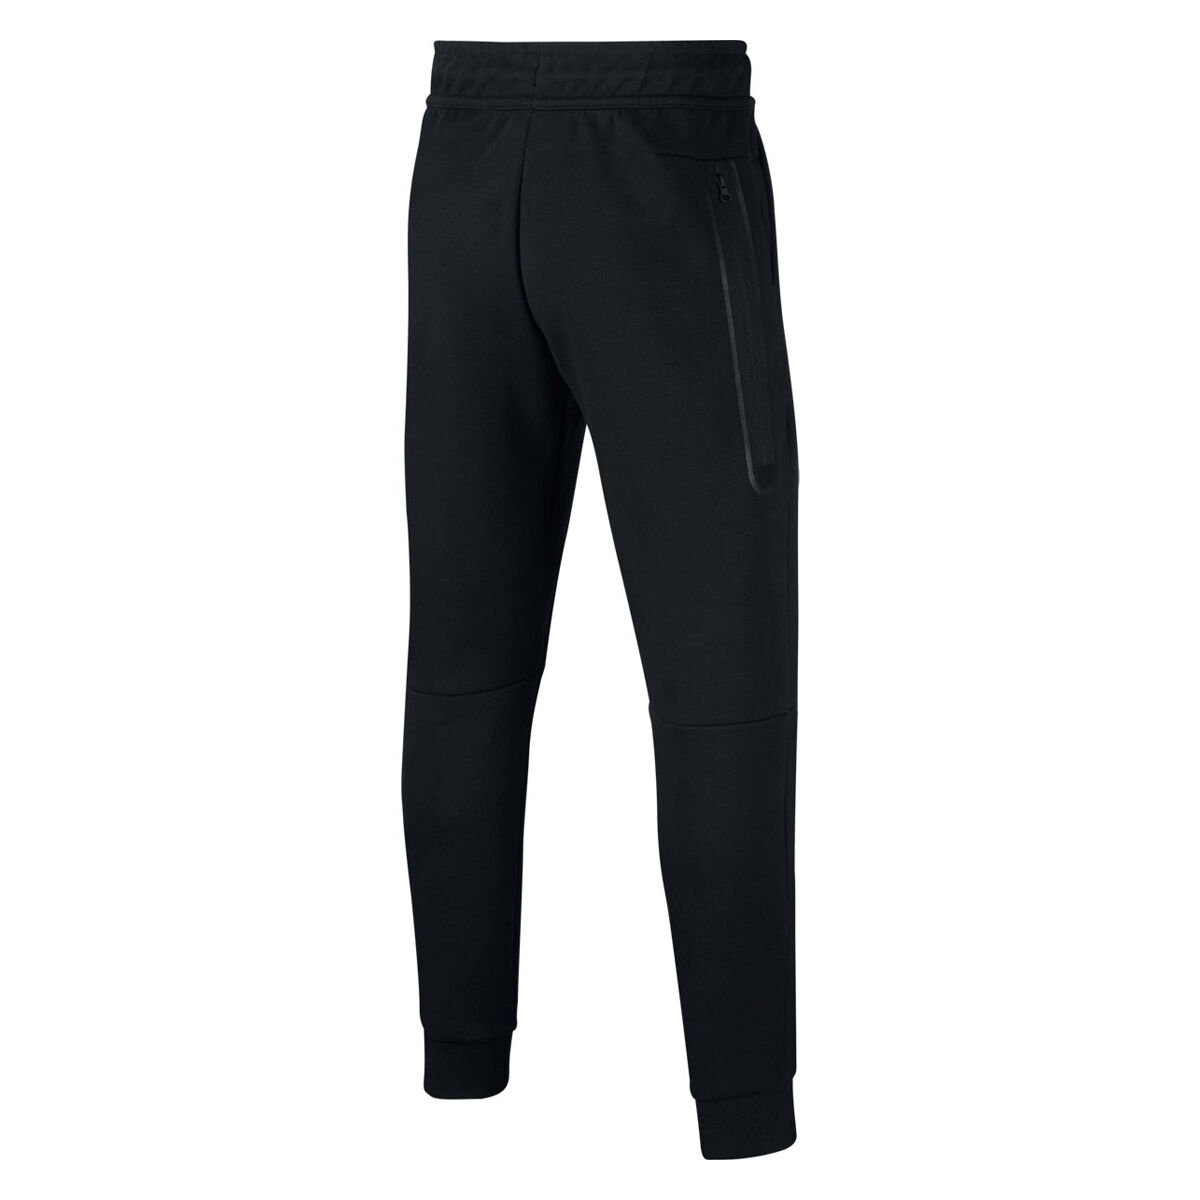 NEW Nike Tech Fleece Pants GIRLS SIZE 6X Sportswear BLACK WHITE 6